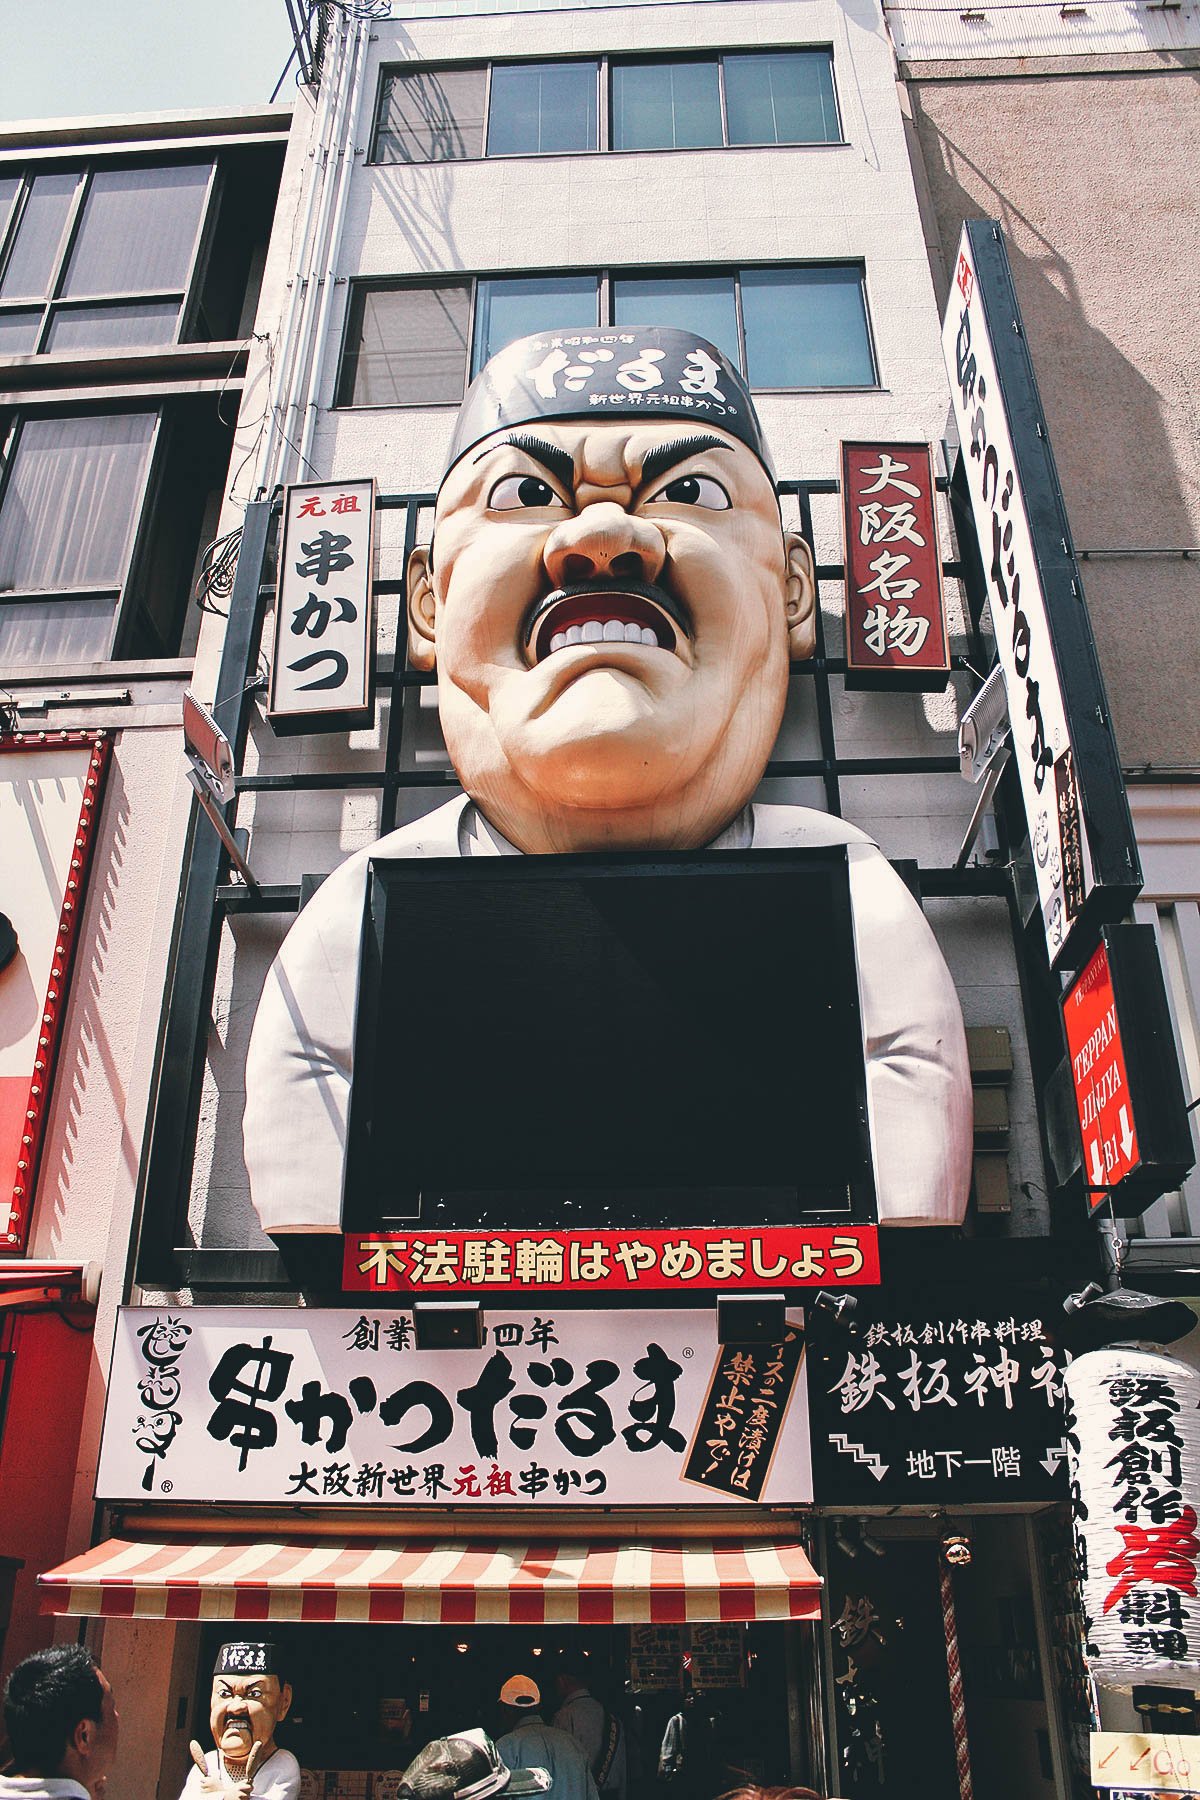 Angry sushi man in Dotonbori, Osaka, Japan